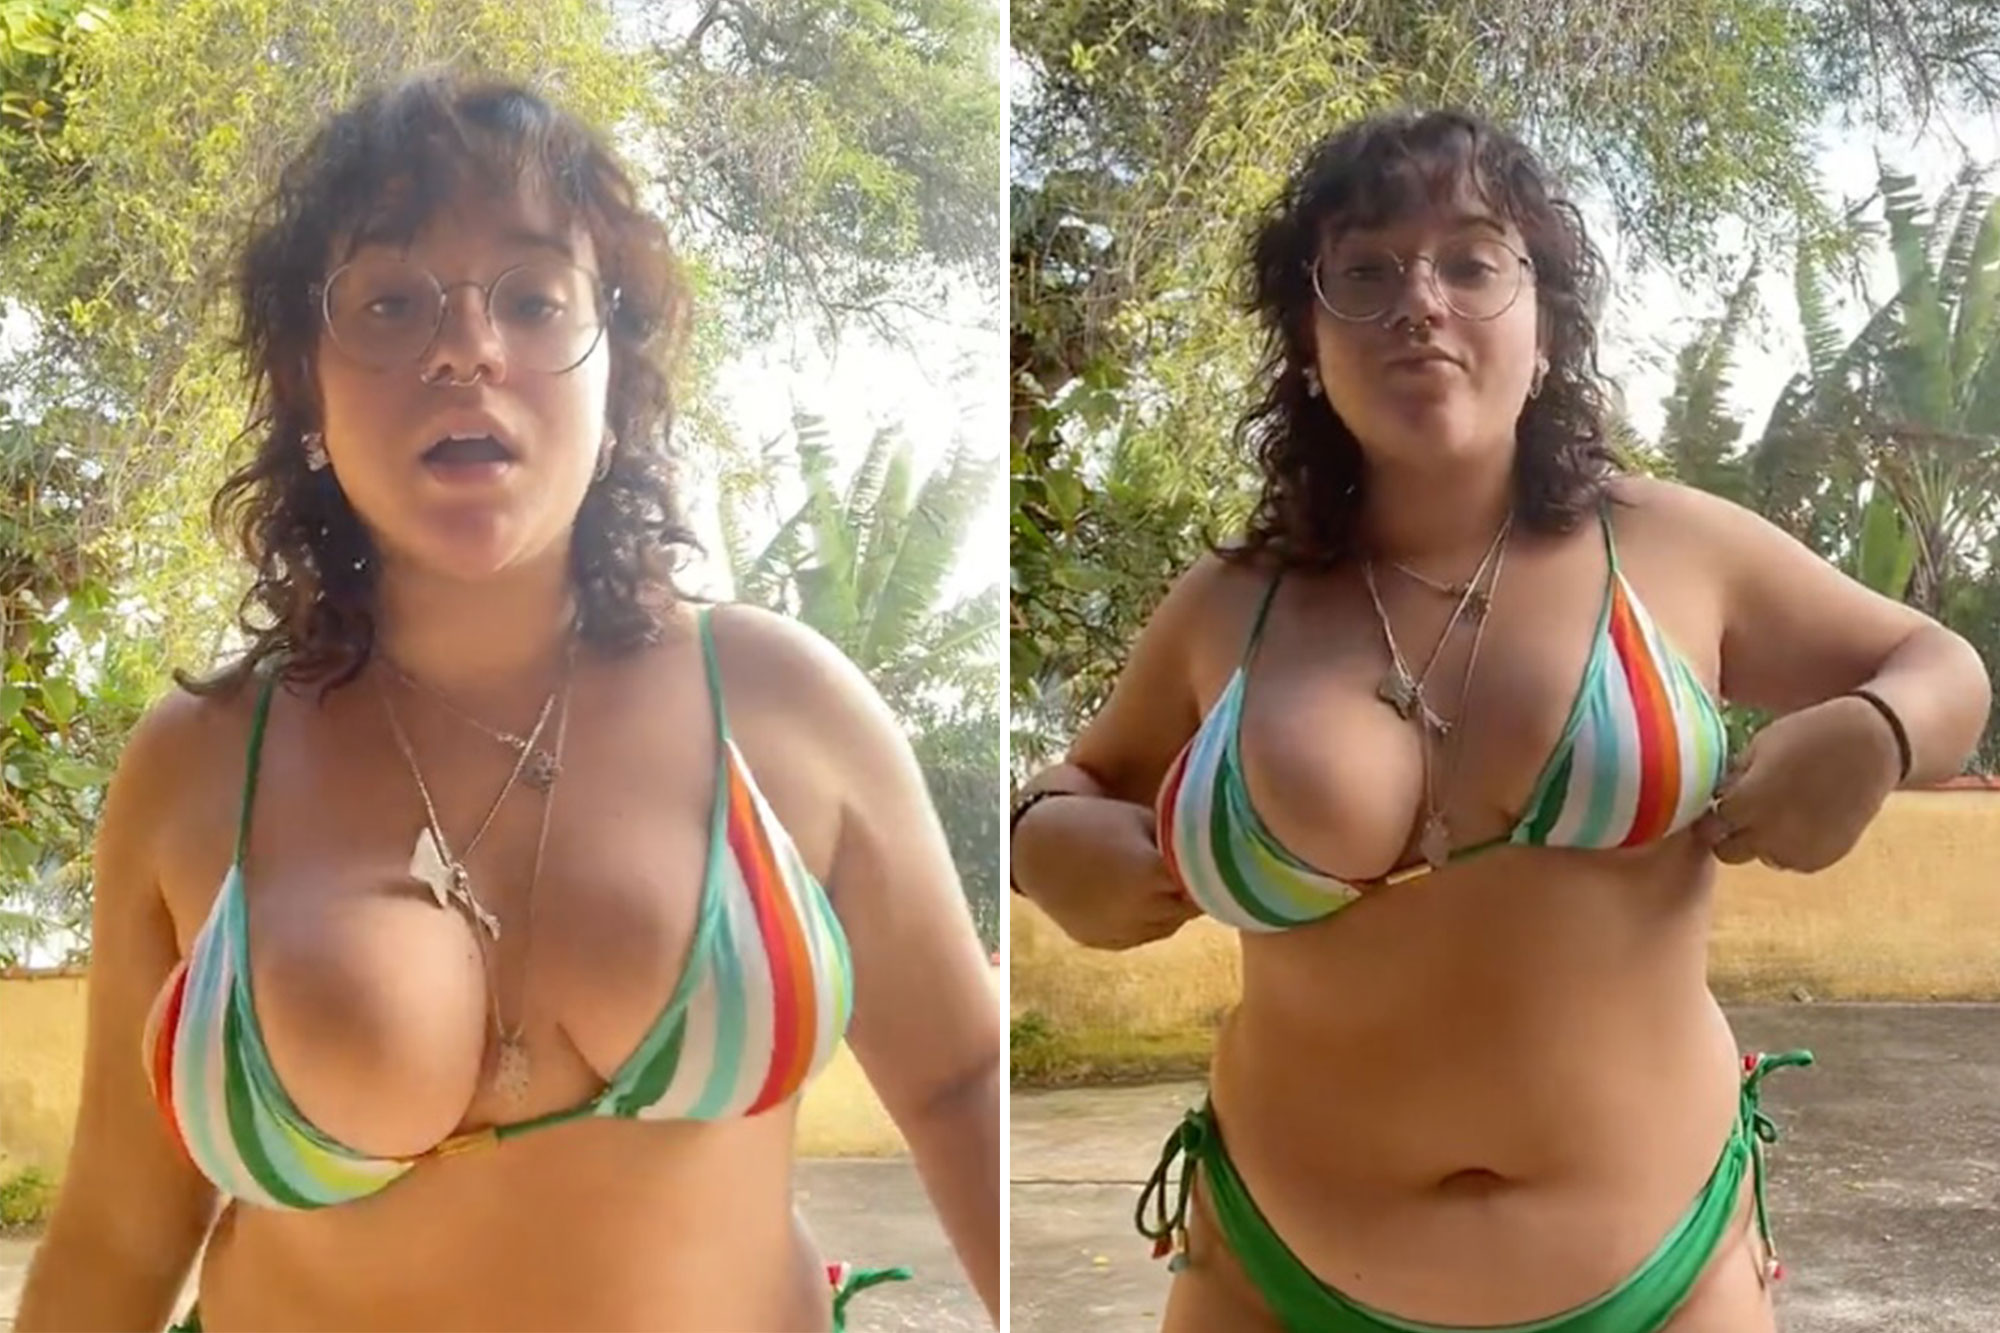 amanda blumenberg recommends Boobs Fall Out Of Bikini